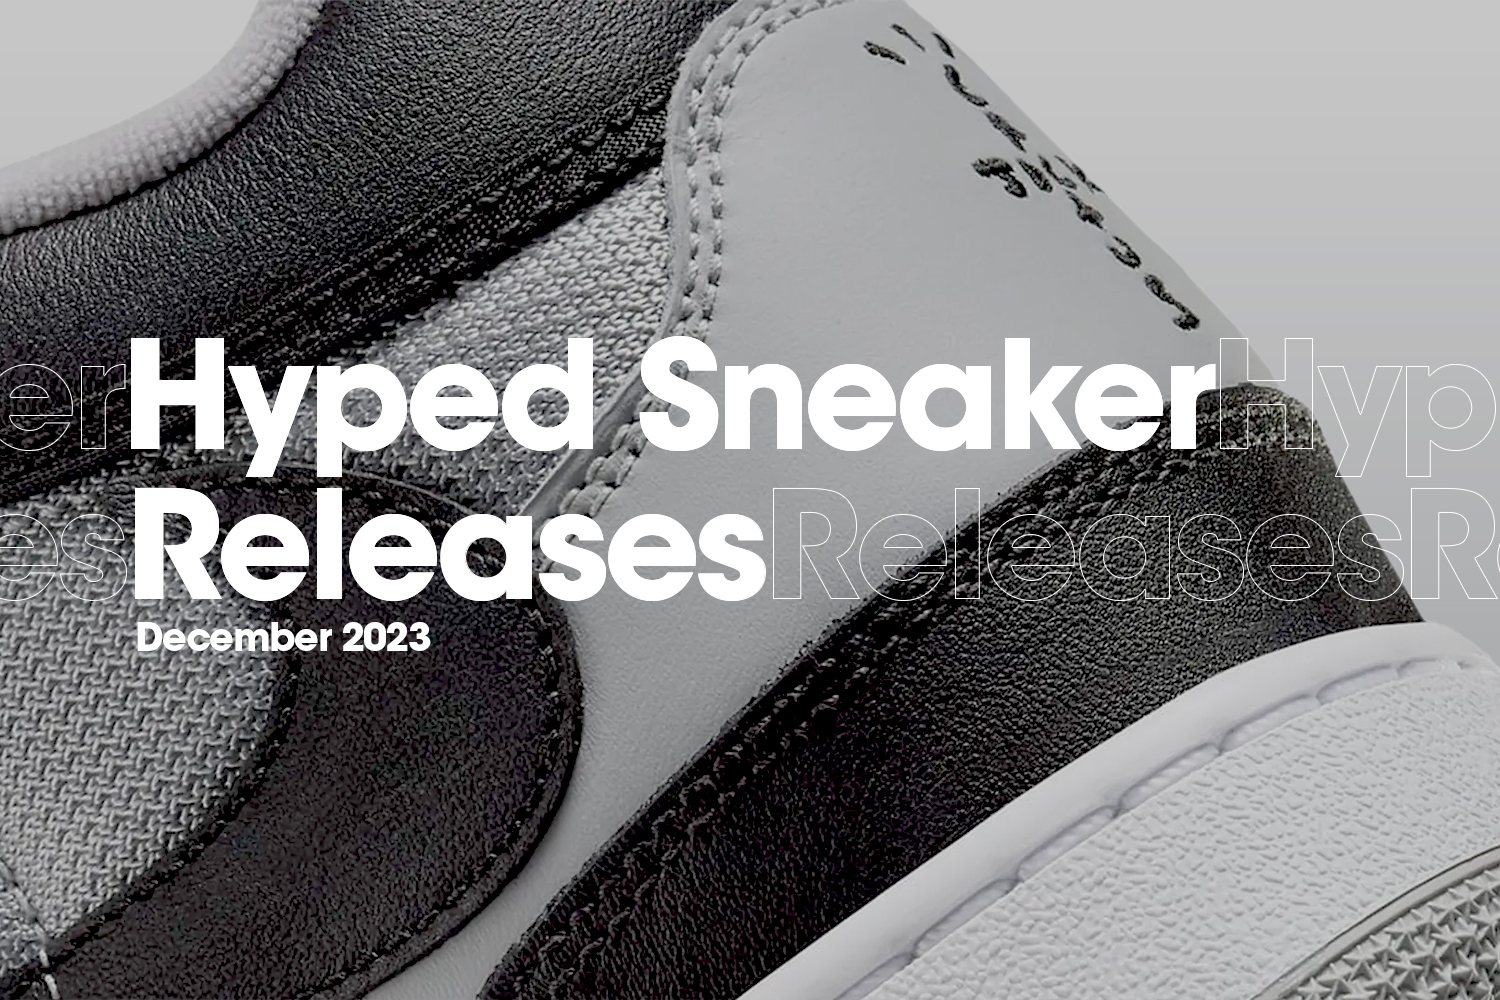 Hyped Sneaker Releases van december 2023